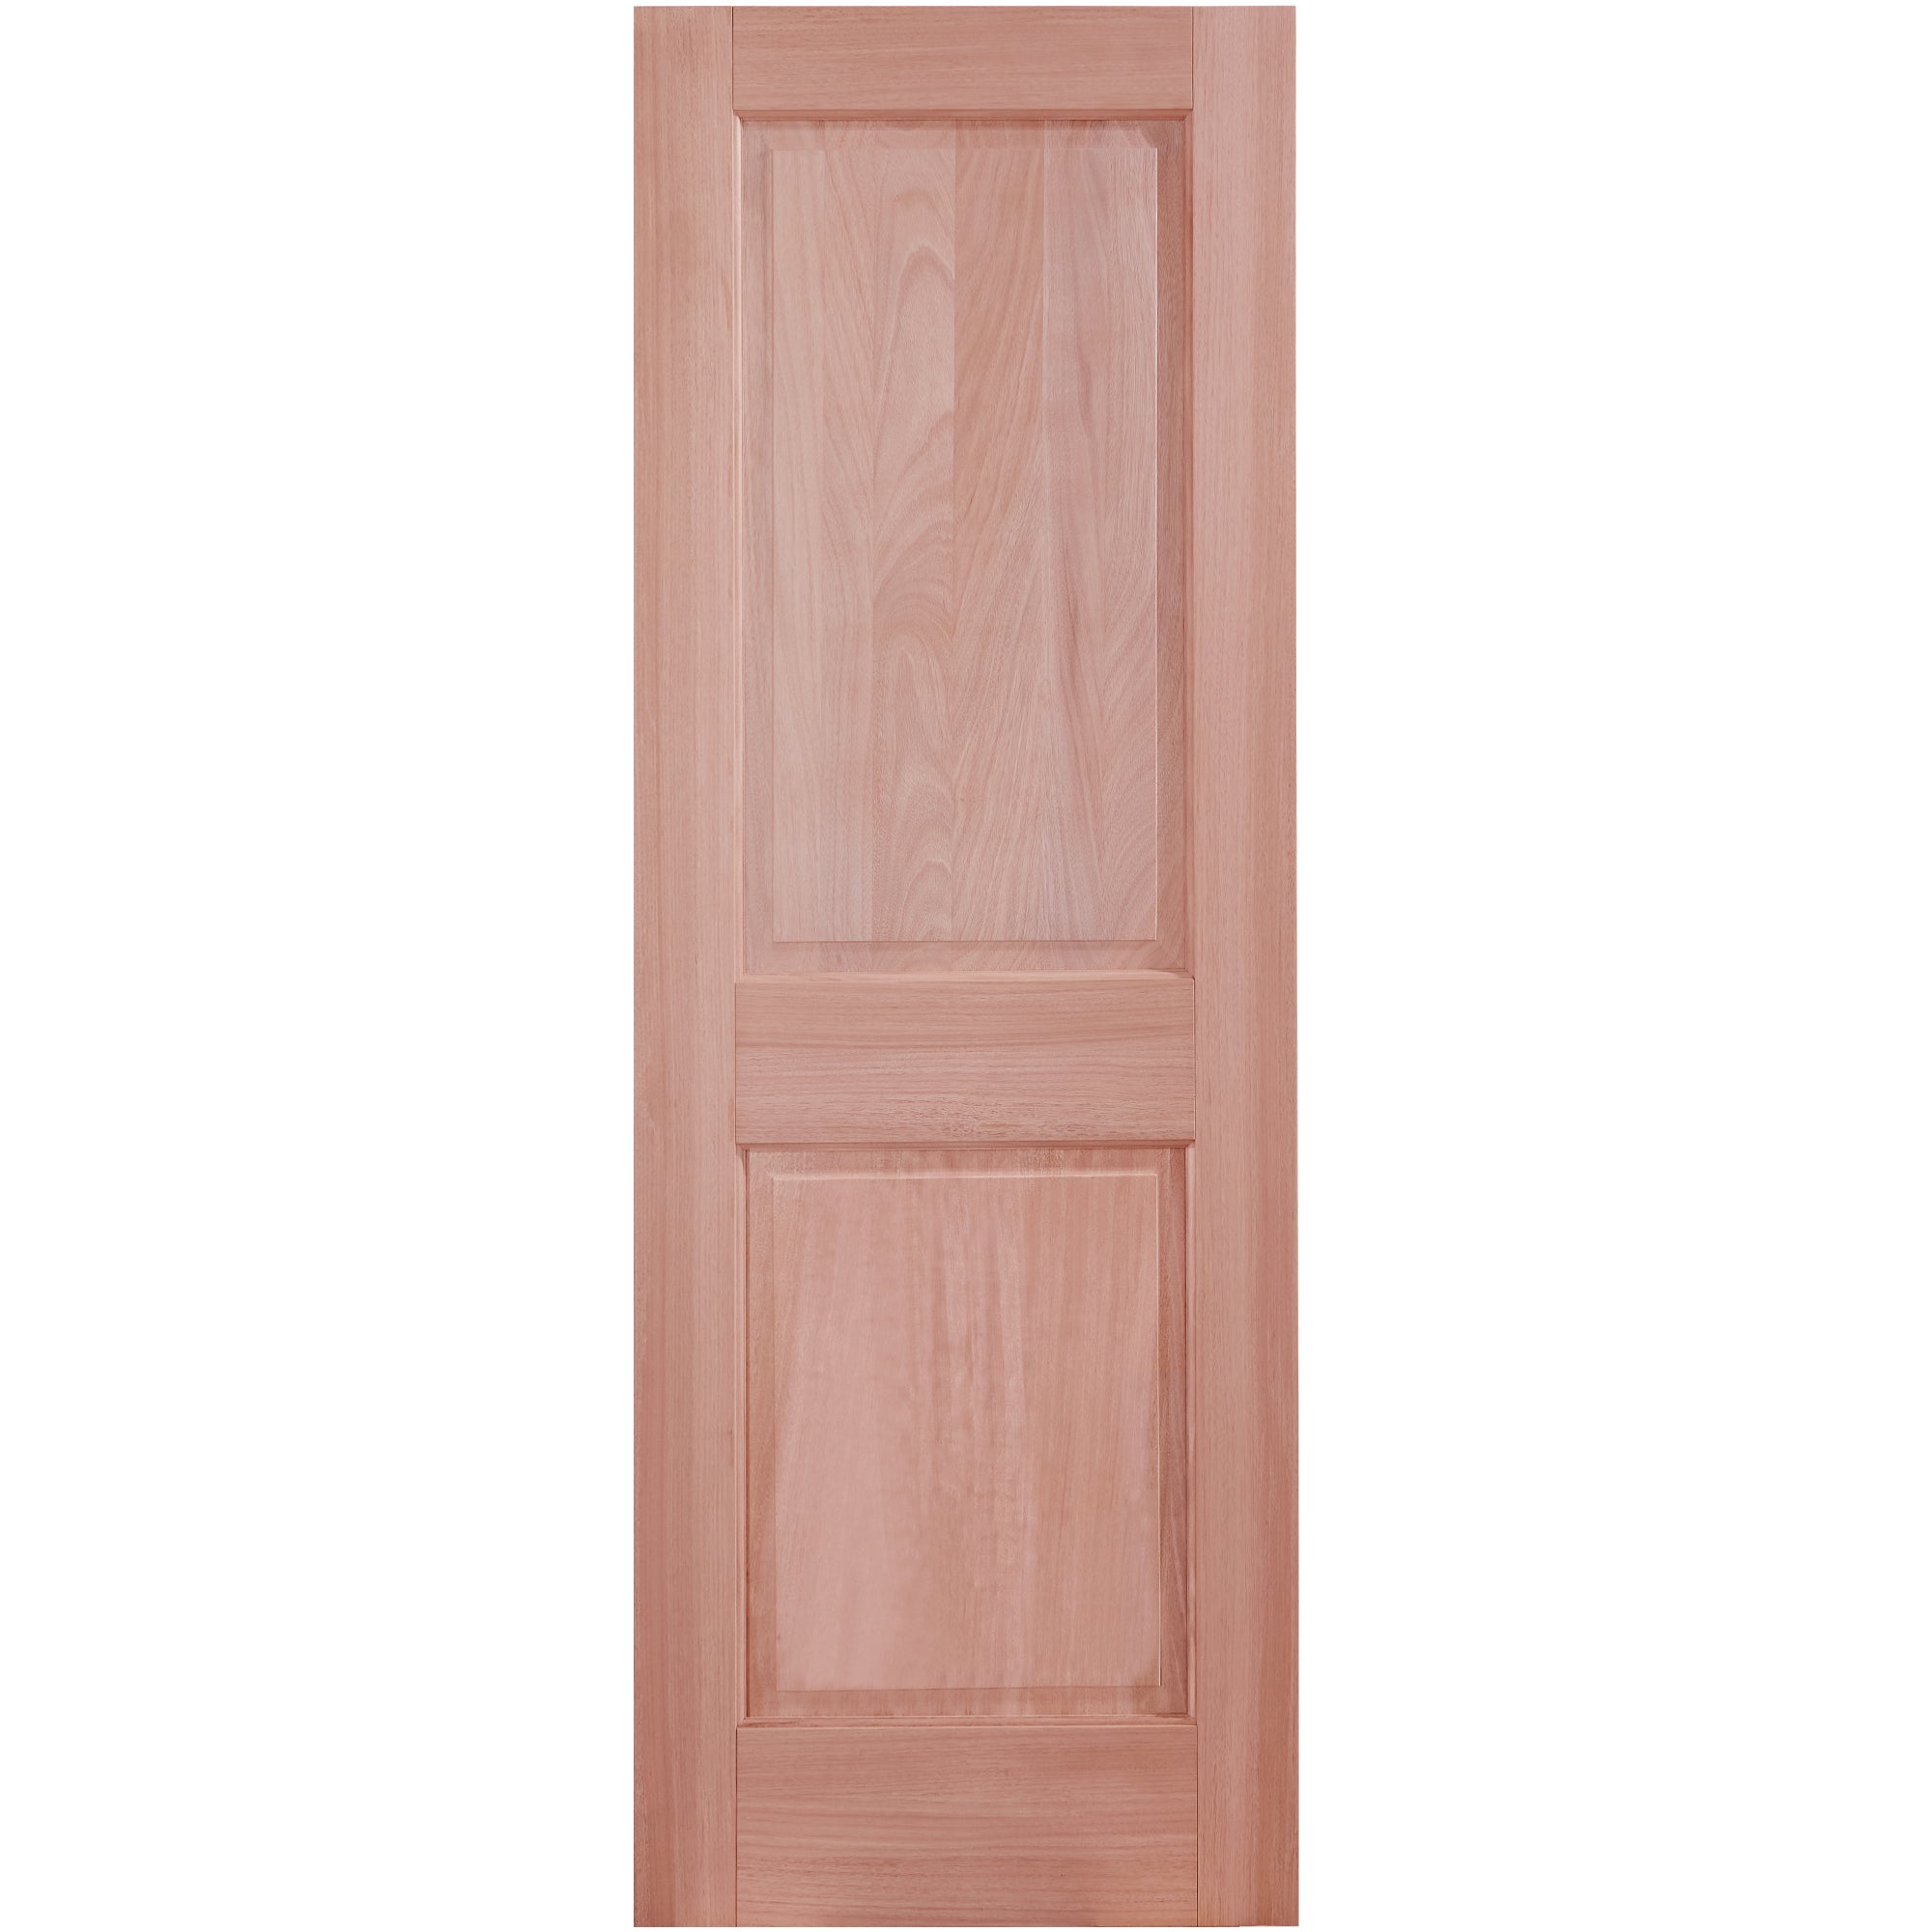 2 Panel Mahogany Solid Wood Door